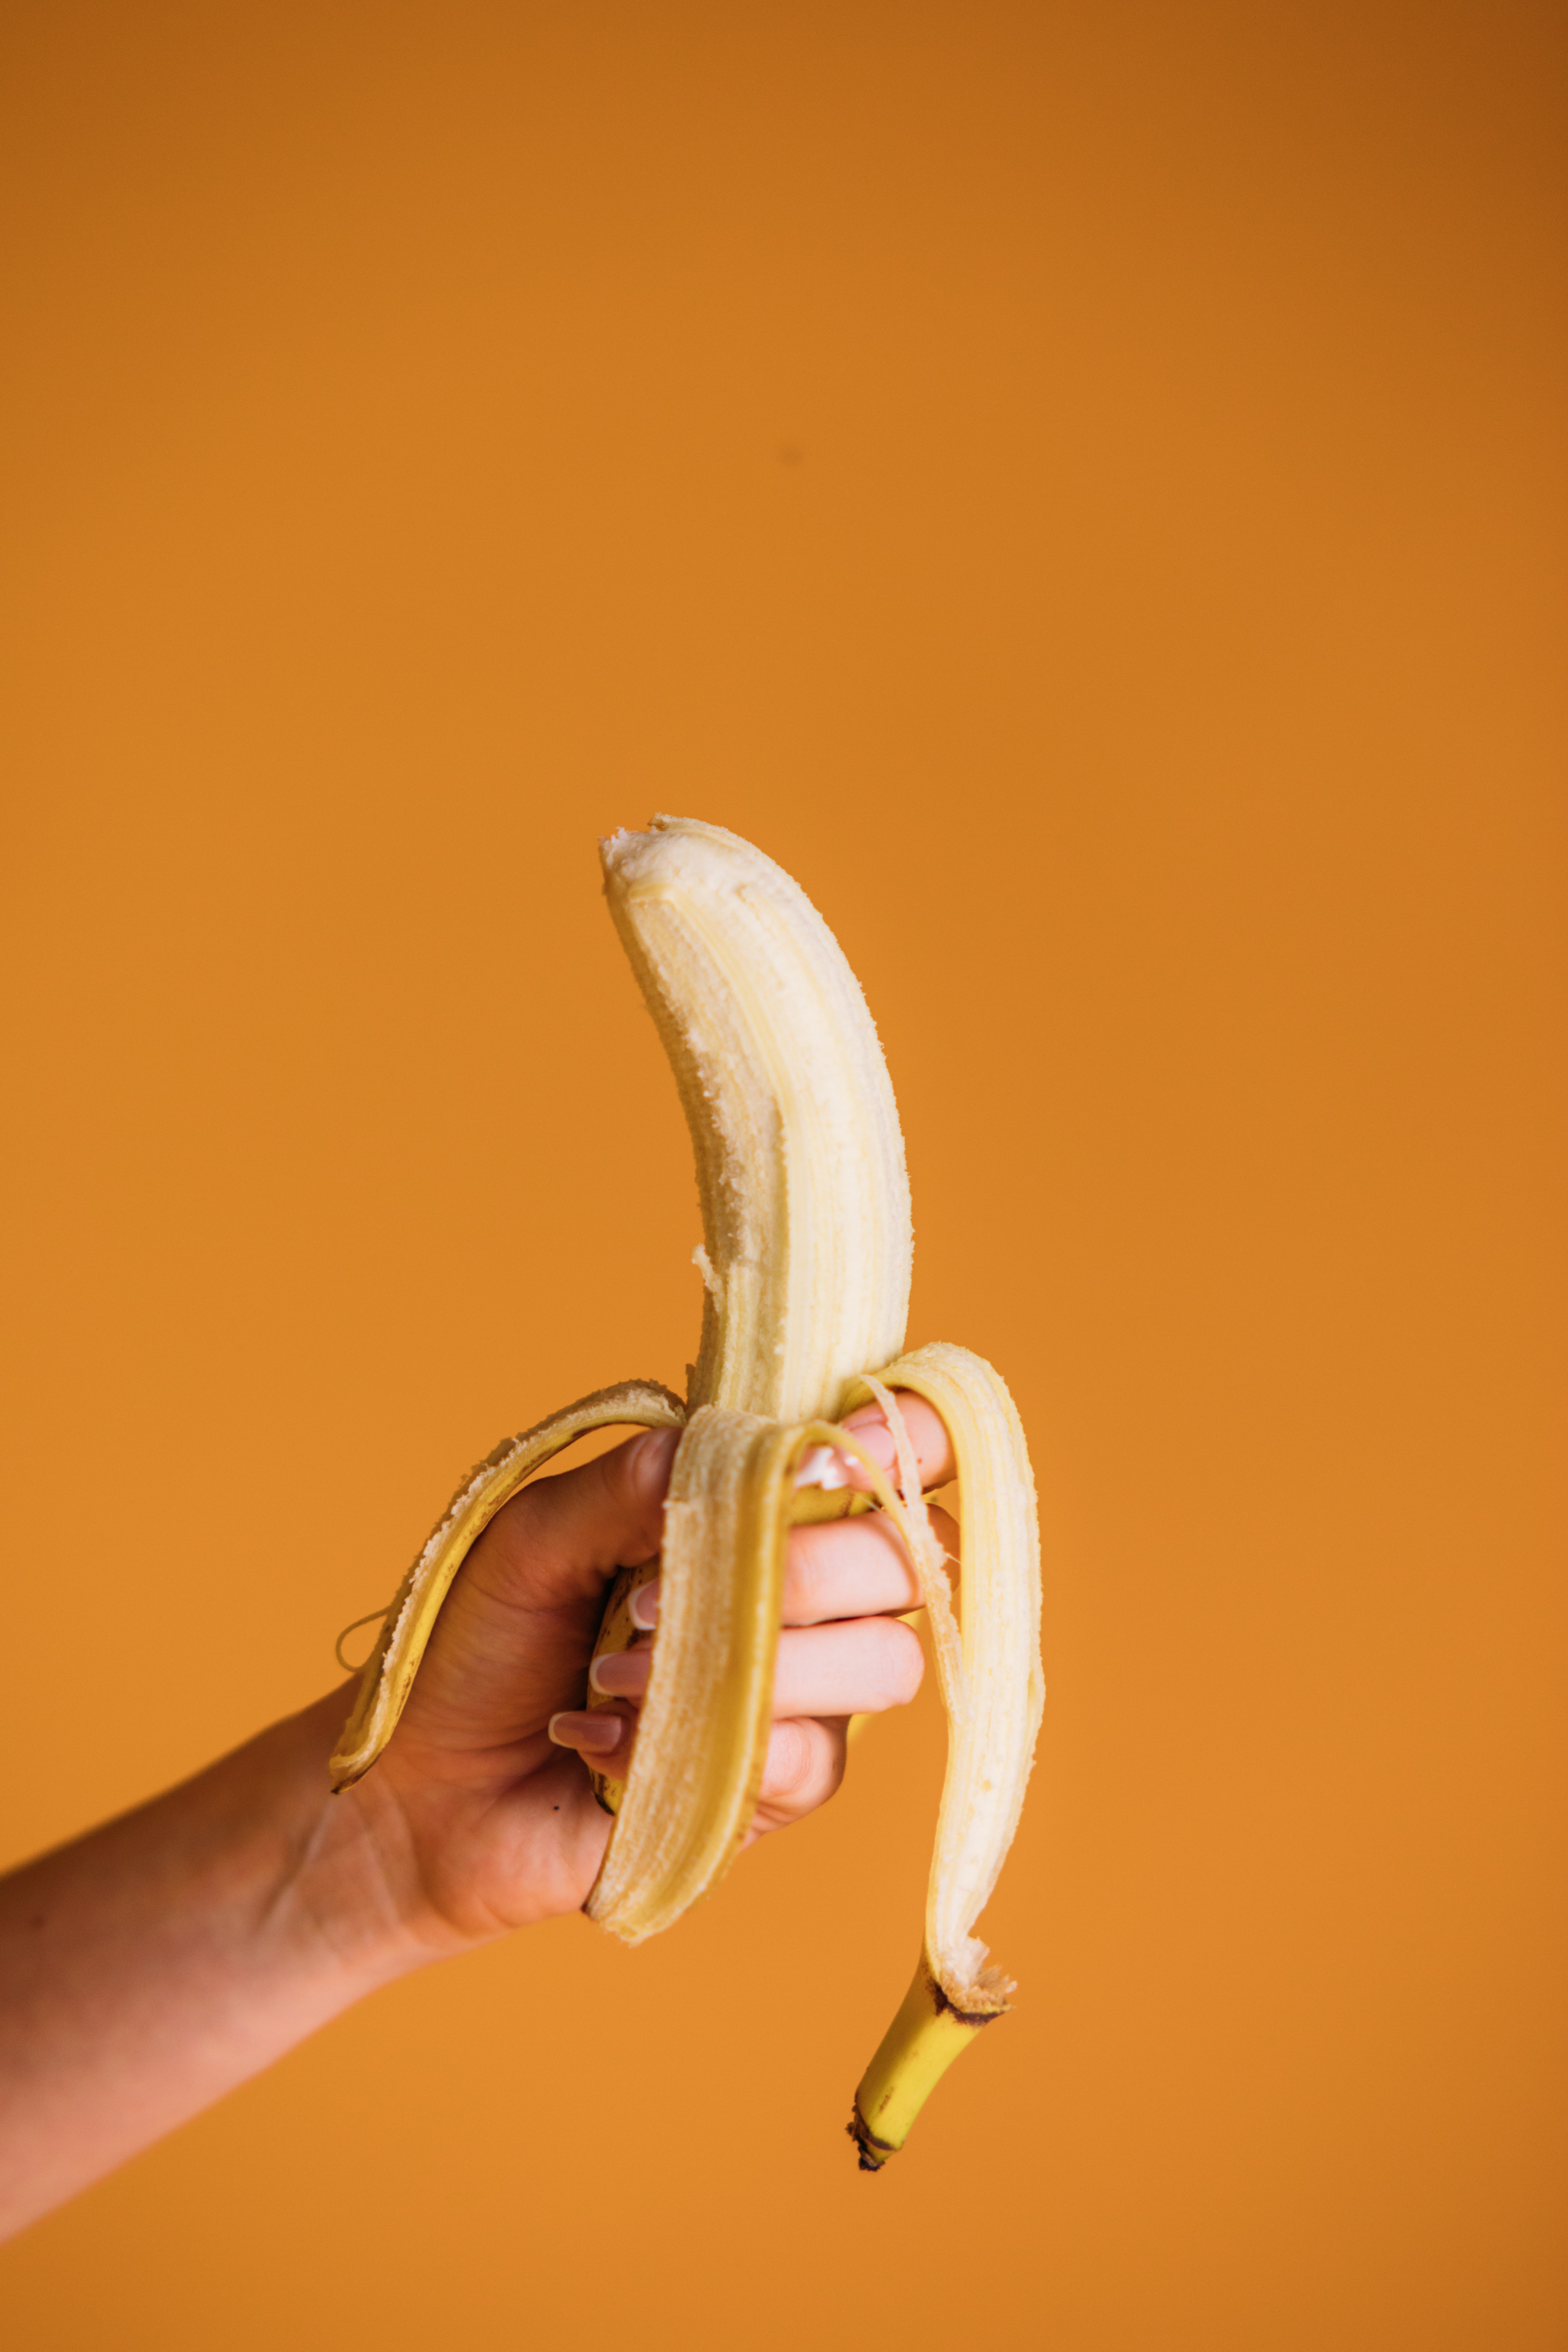 Top 7 Health Benefits of Eating Banana Daily